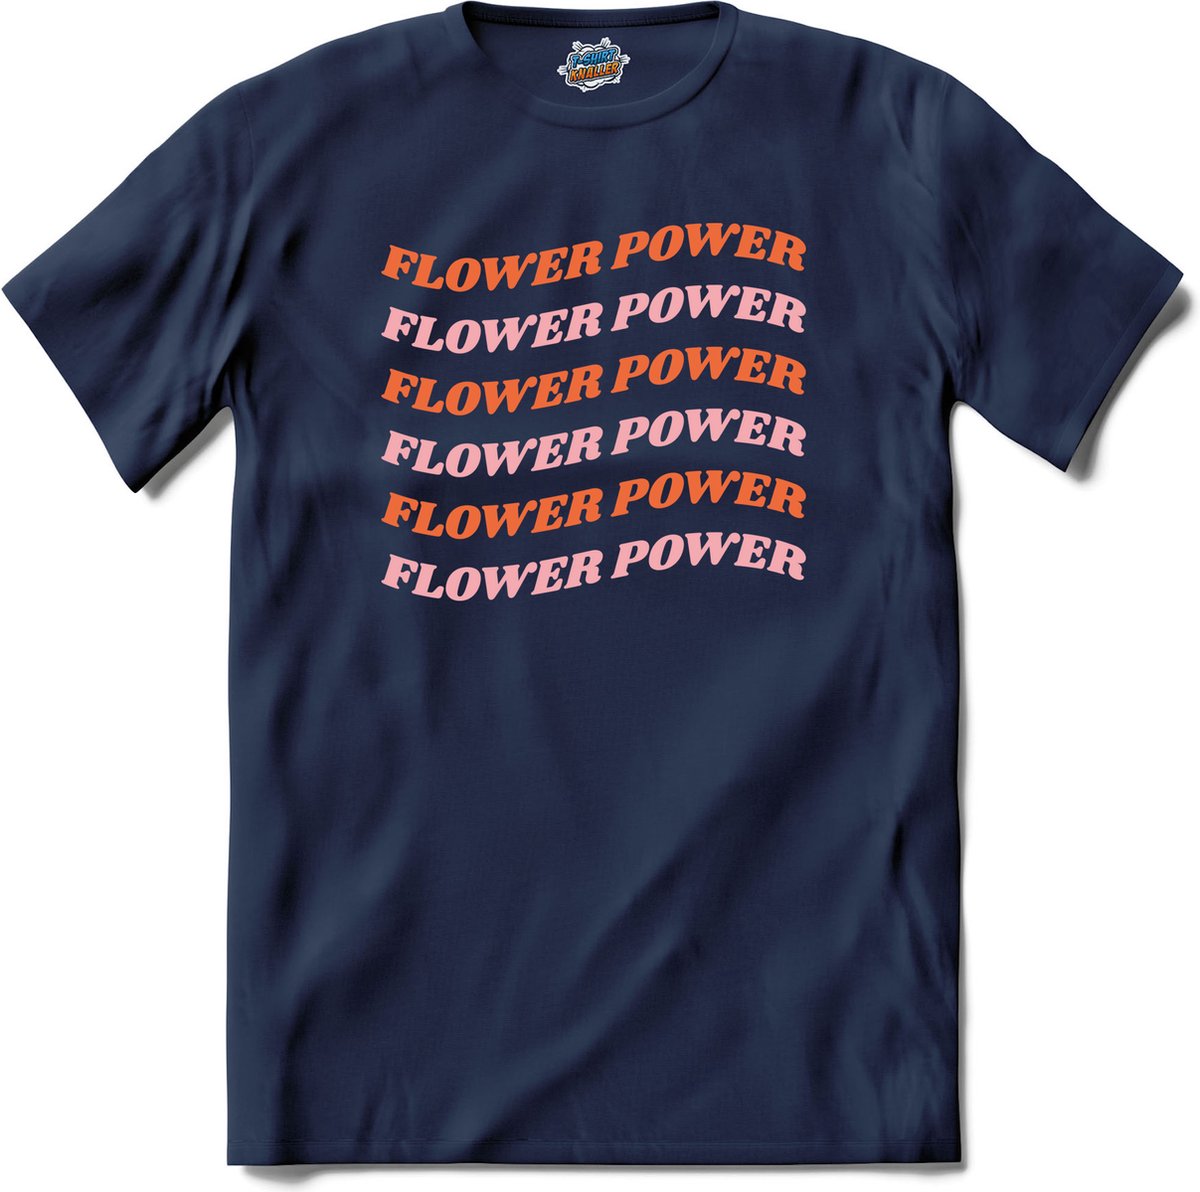 Flower power - T-Shirt - Meisjes - Navy Blue - Maat 8 jaar